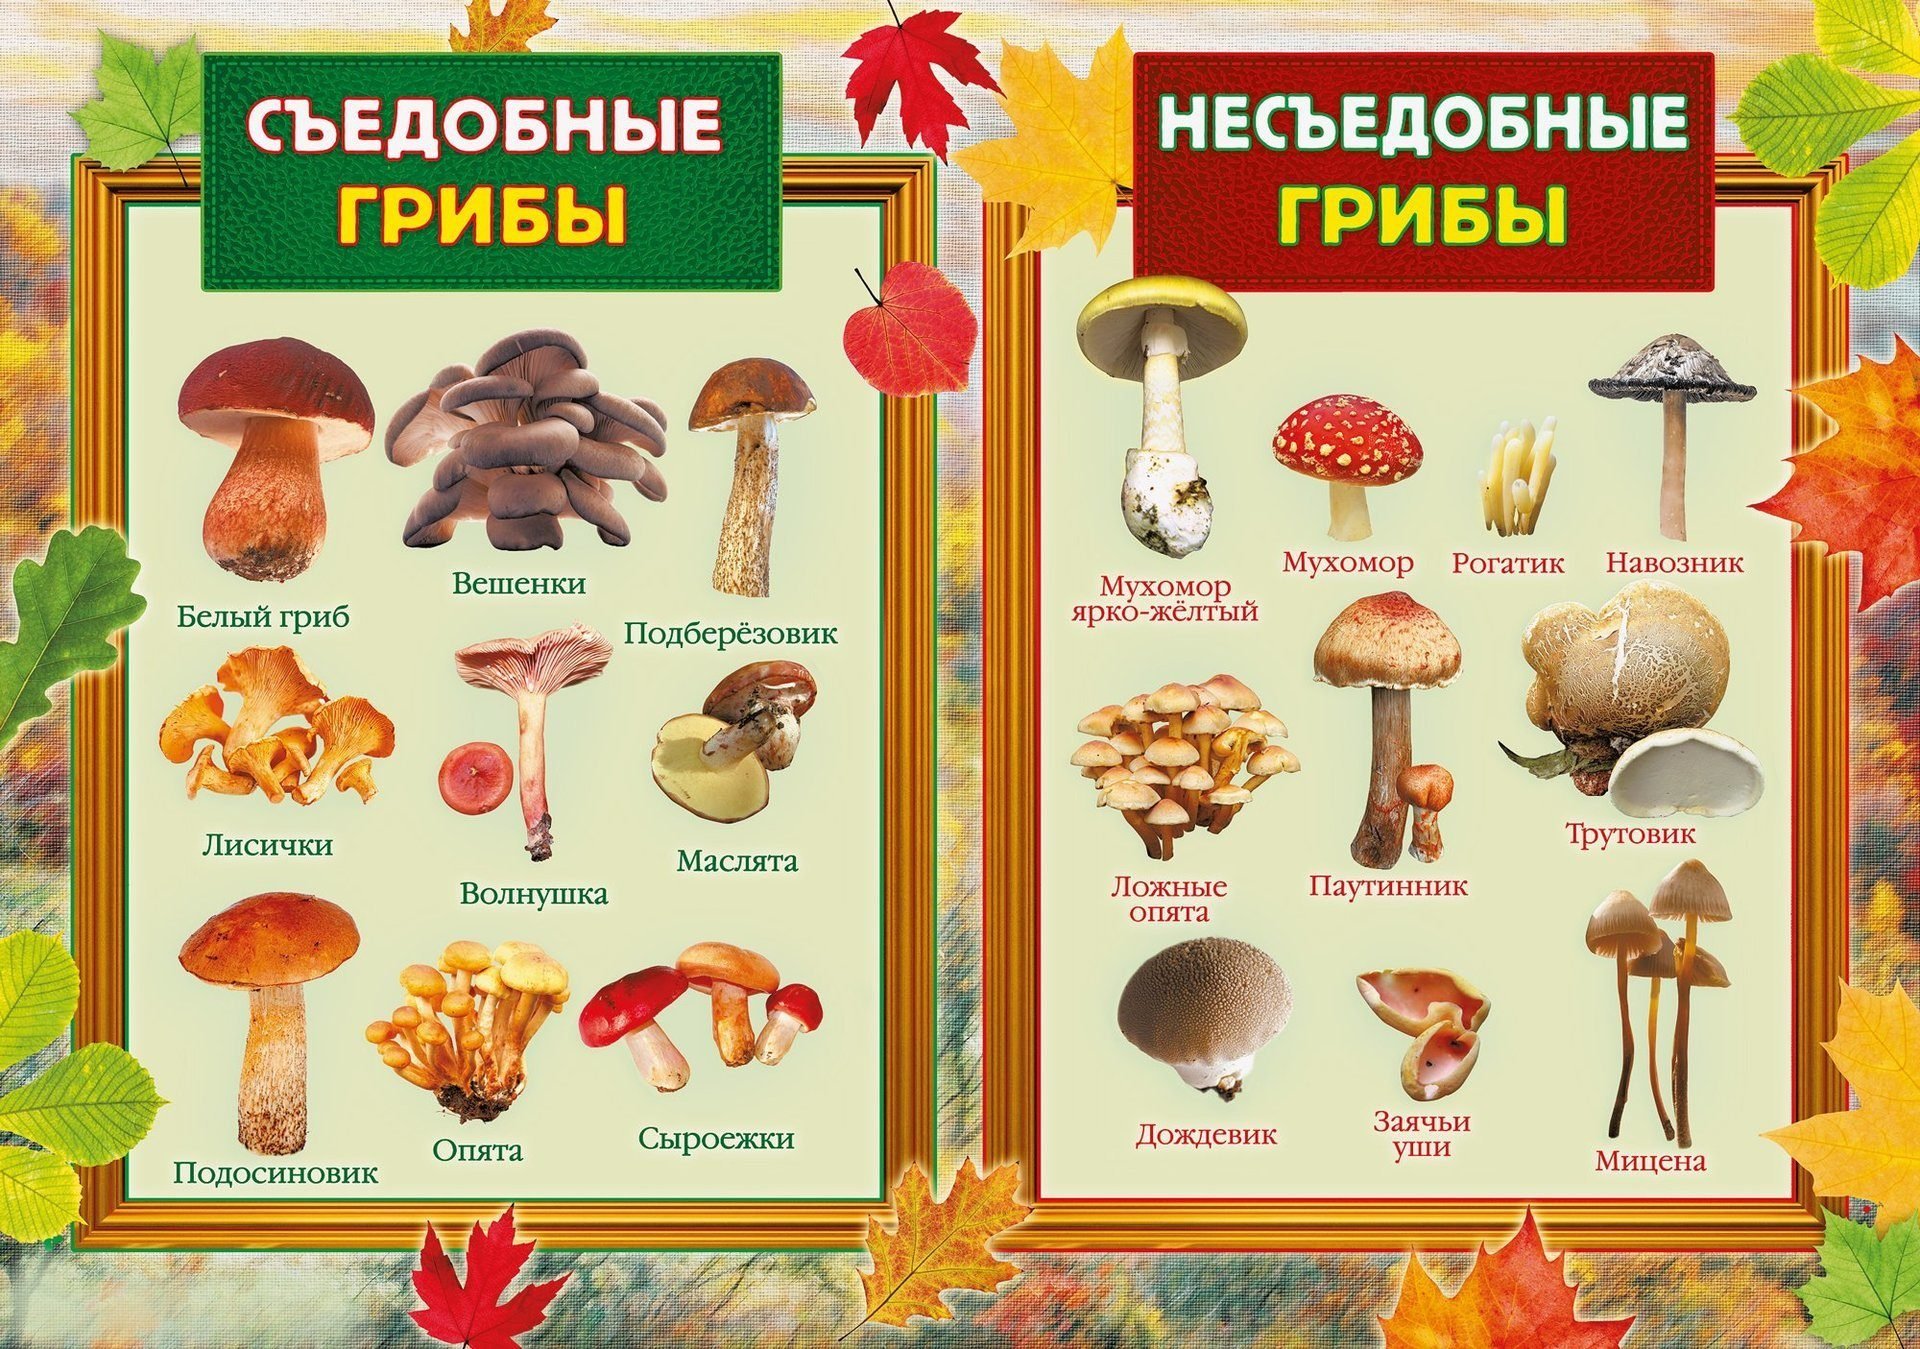 Ядовитые грибы рисунки - фото и картинки бородино-молодежка.рф